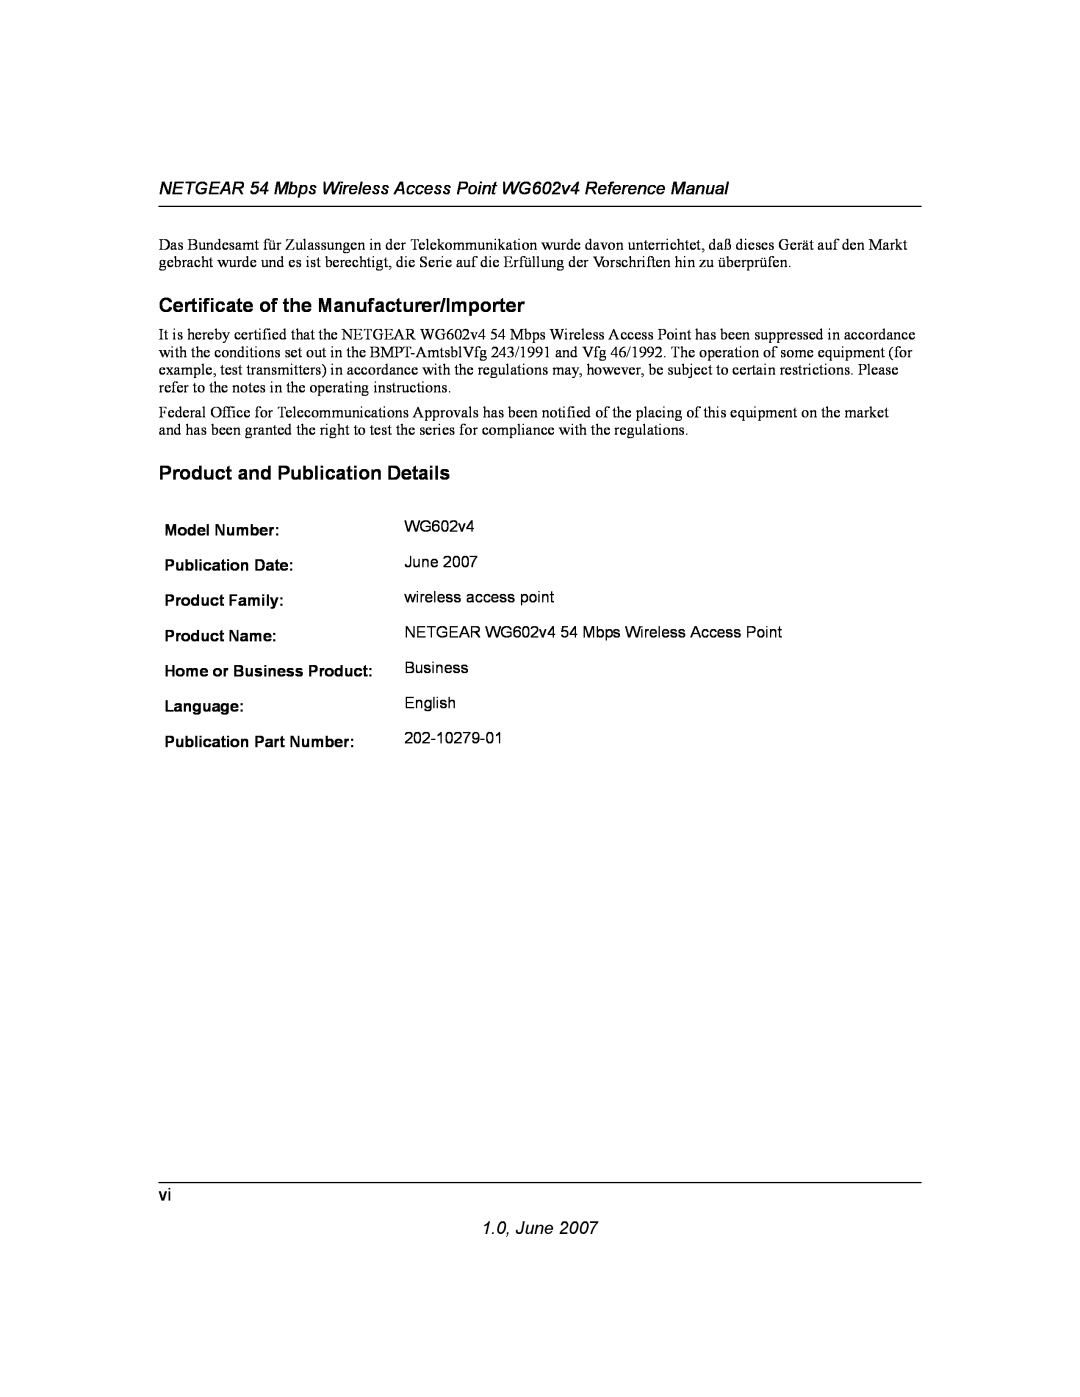 NETGEAR WG602V4 manual Certificate of the Manufacturer/Importer, Product and Publication Details, 1.0, June 